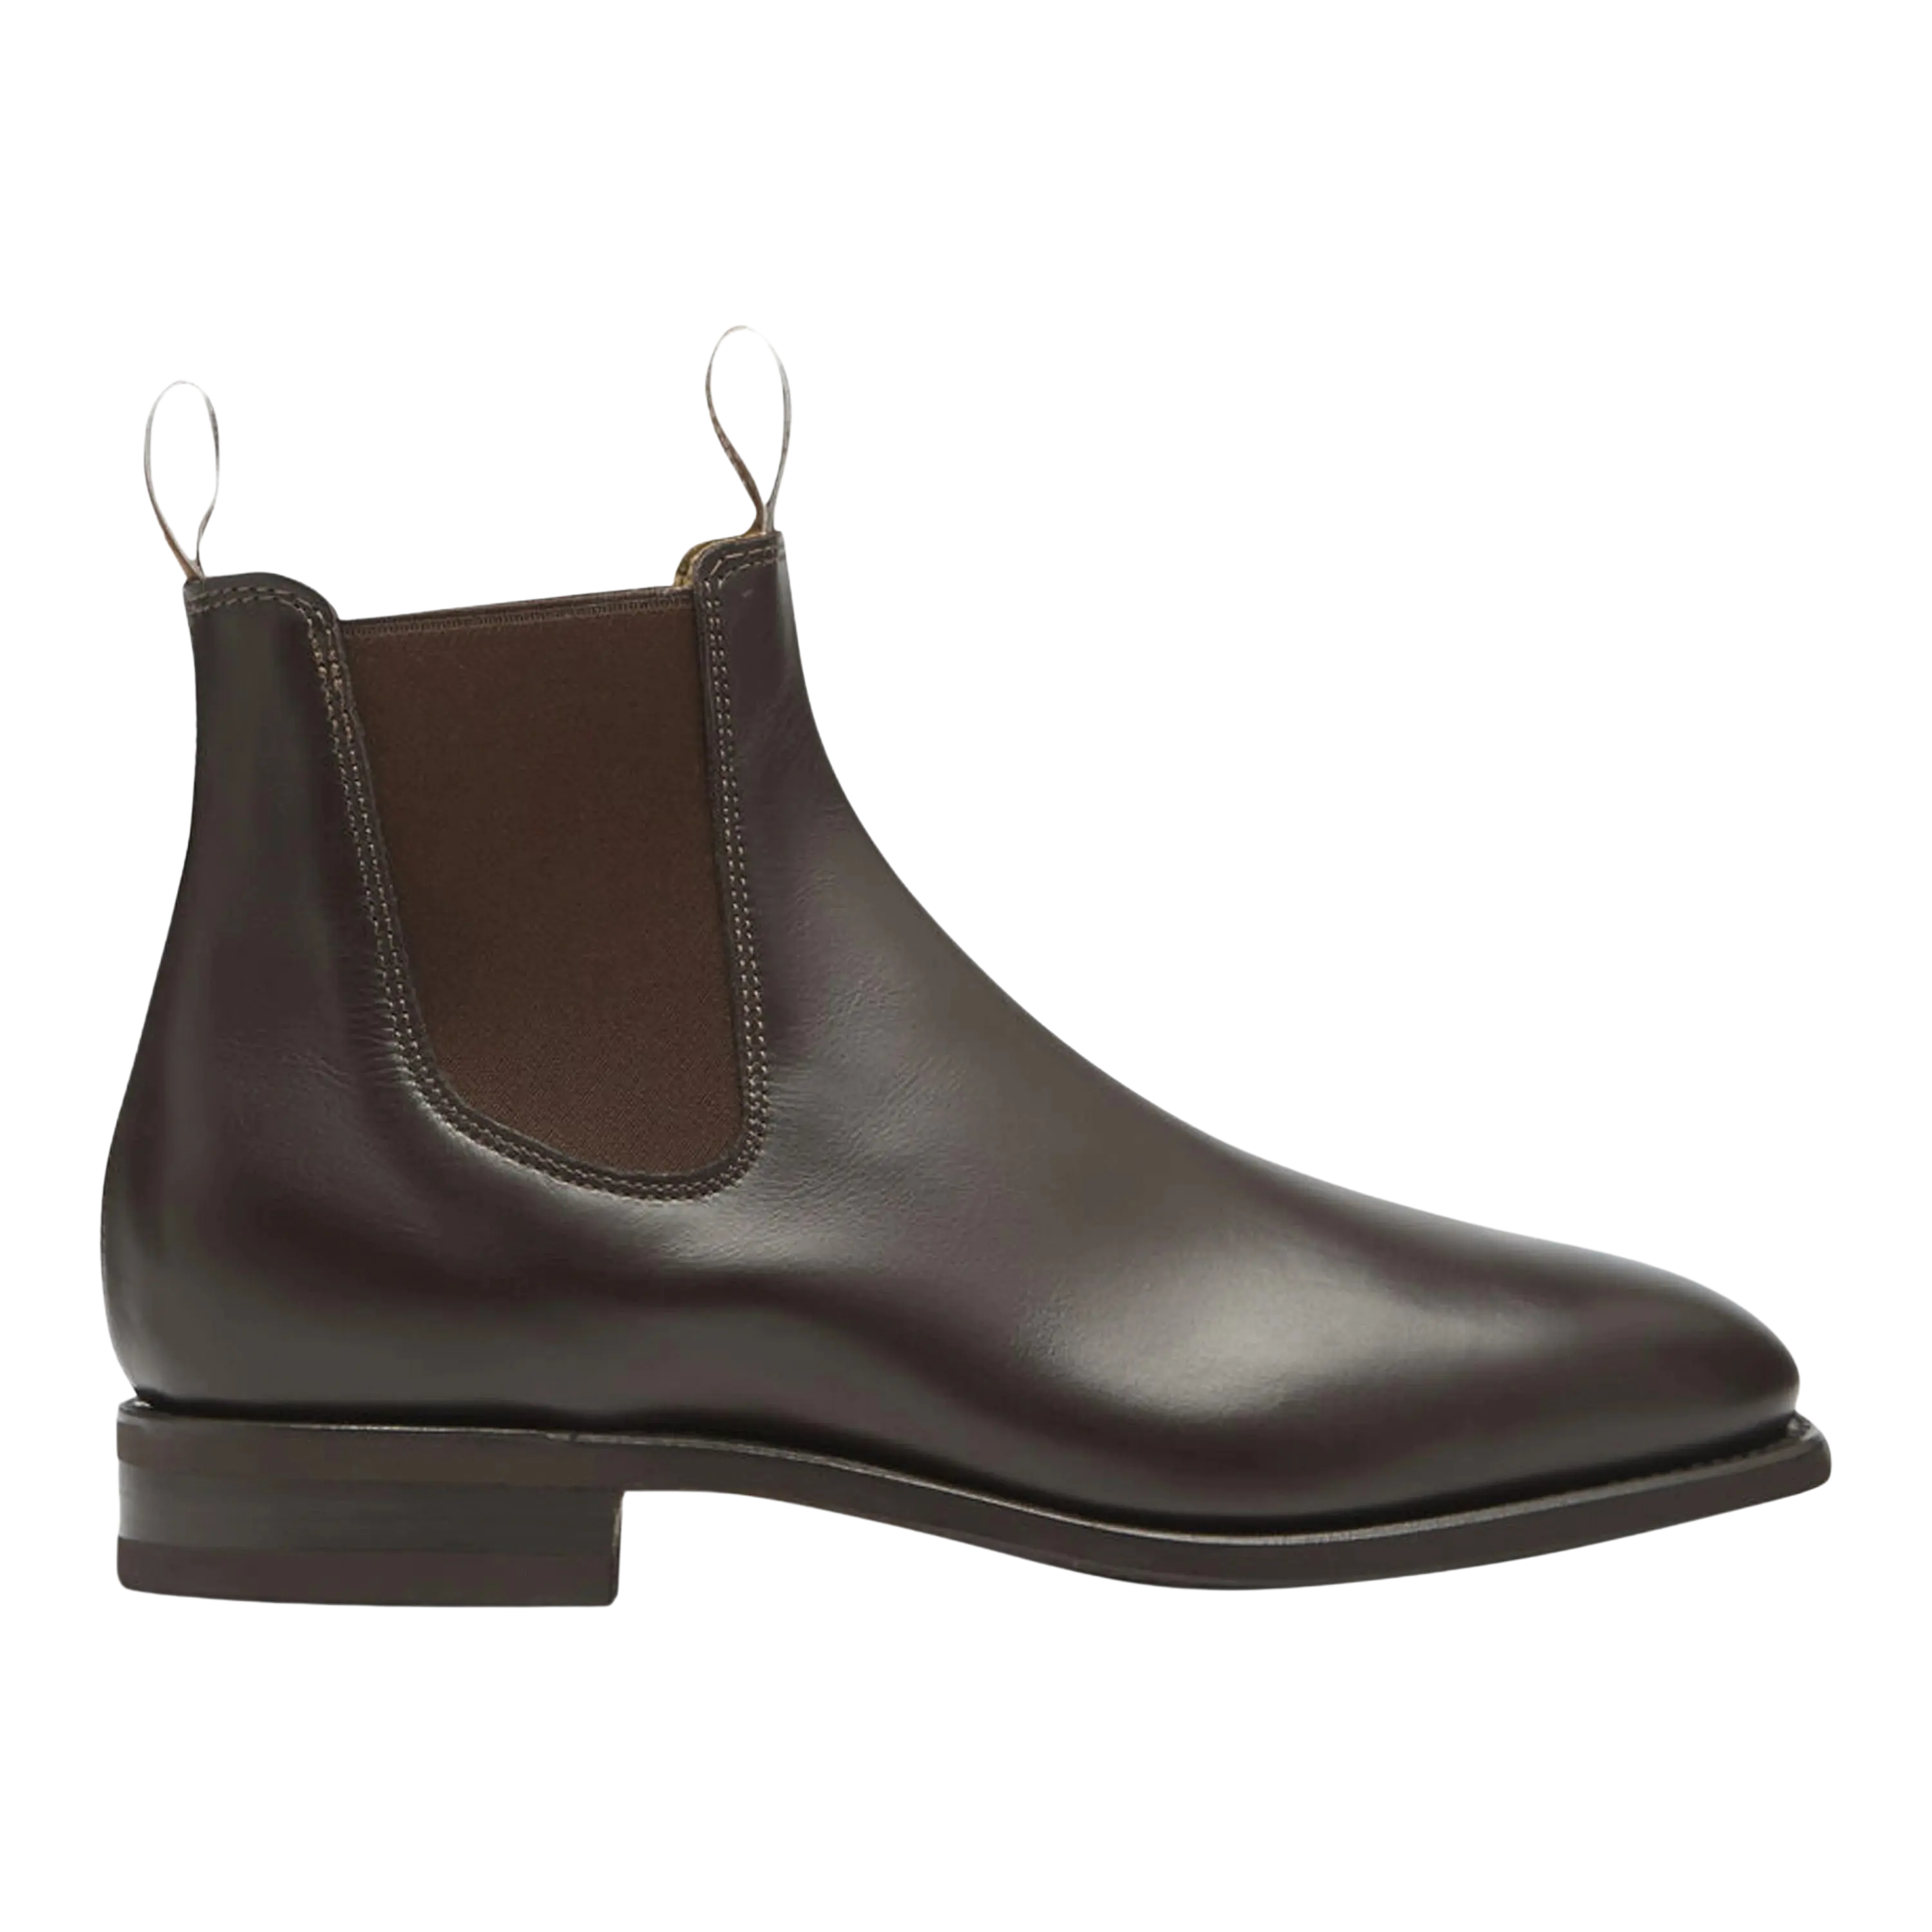 R. M. Williams Comfort Craftsman Boots for Men in Chestnut